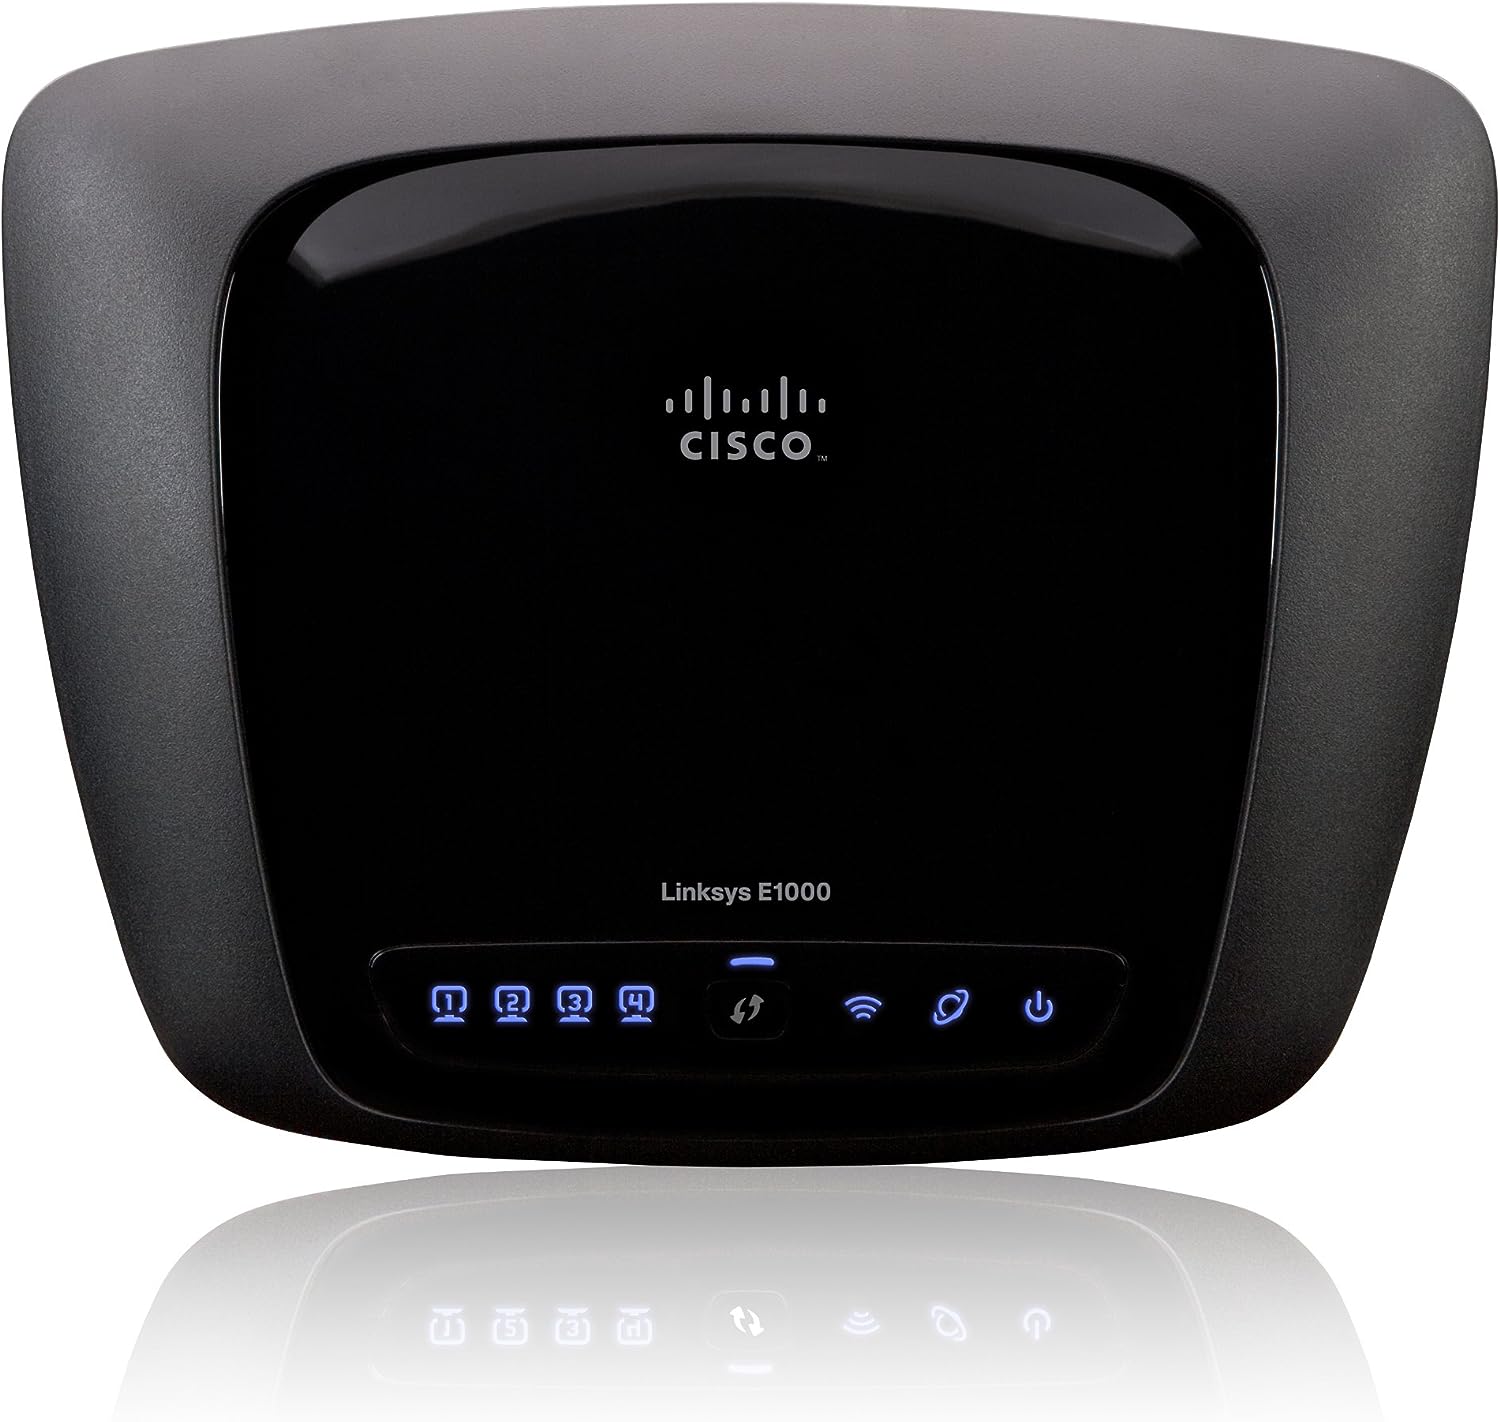 63fa5361072bab112433cea3 cisco linksys e1000 wireless n router